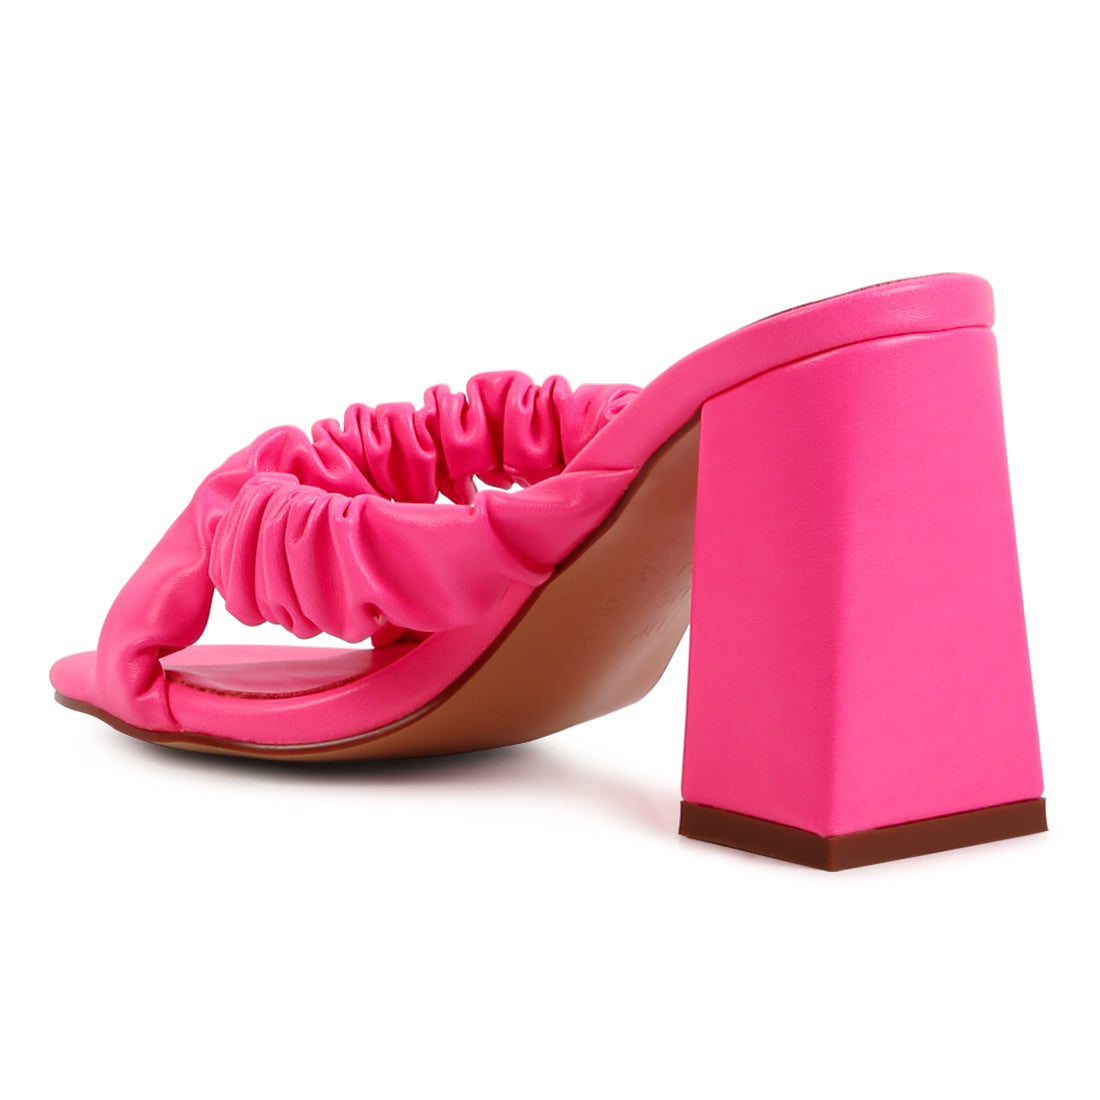 Strap Block Sandals in Neon Pink